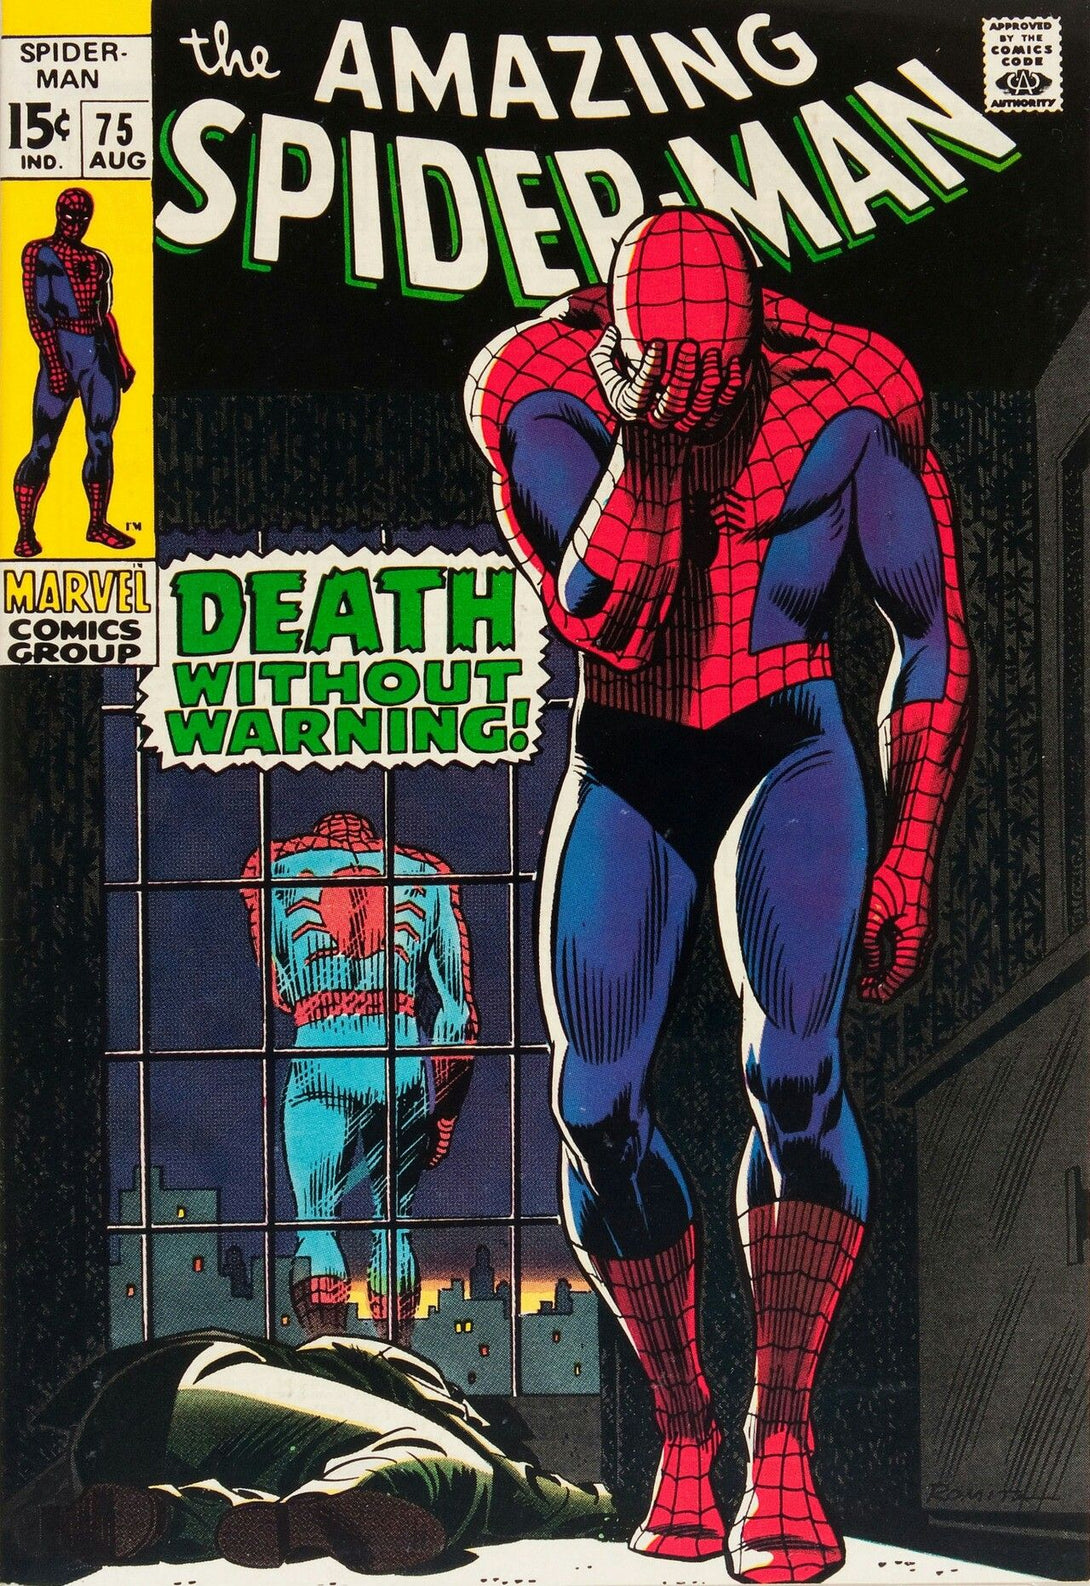 The Amazing Spider-Man # 75